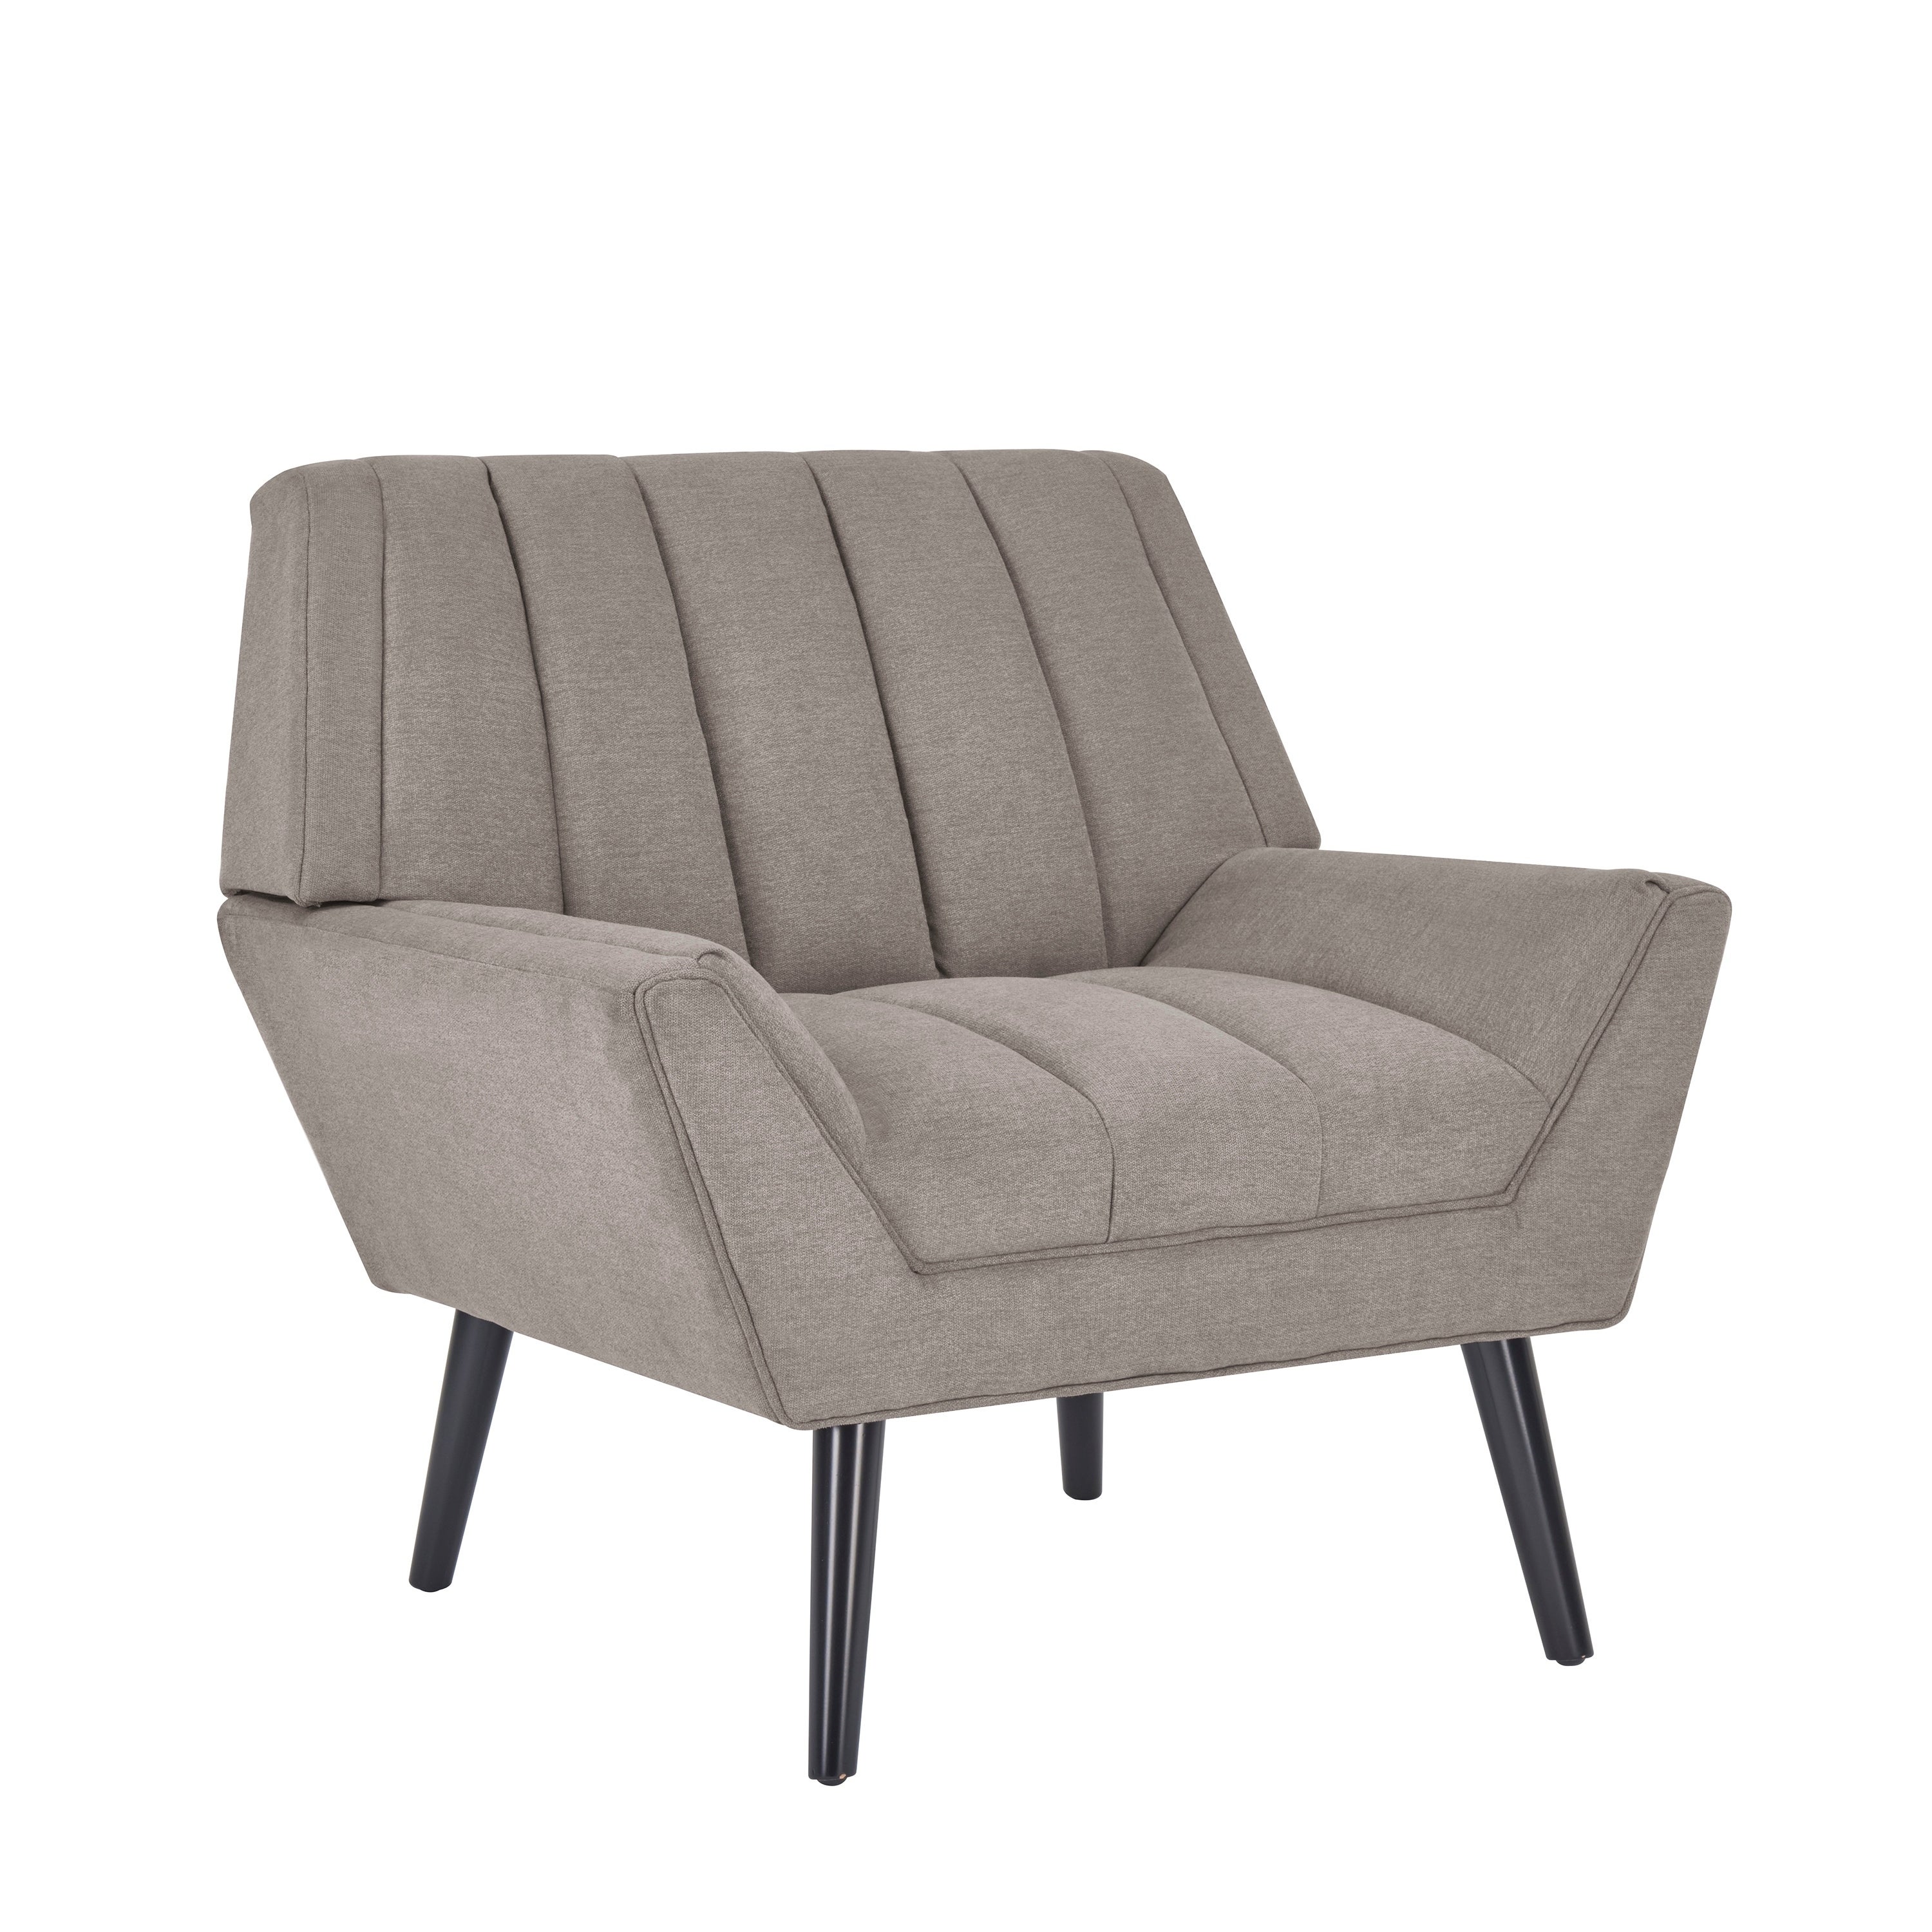 Green Sectional Sofa $150 - $205 by Kingbird Furniture Company 8